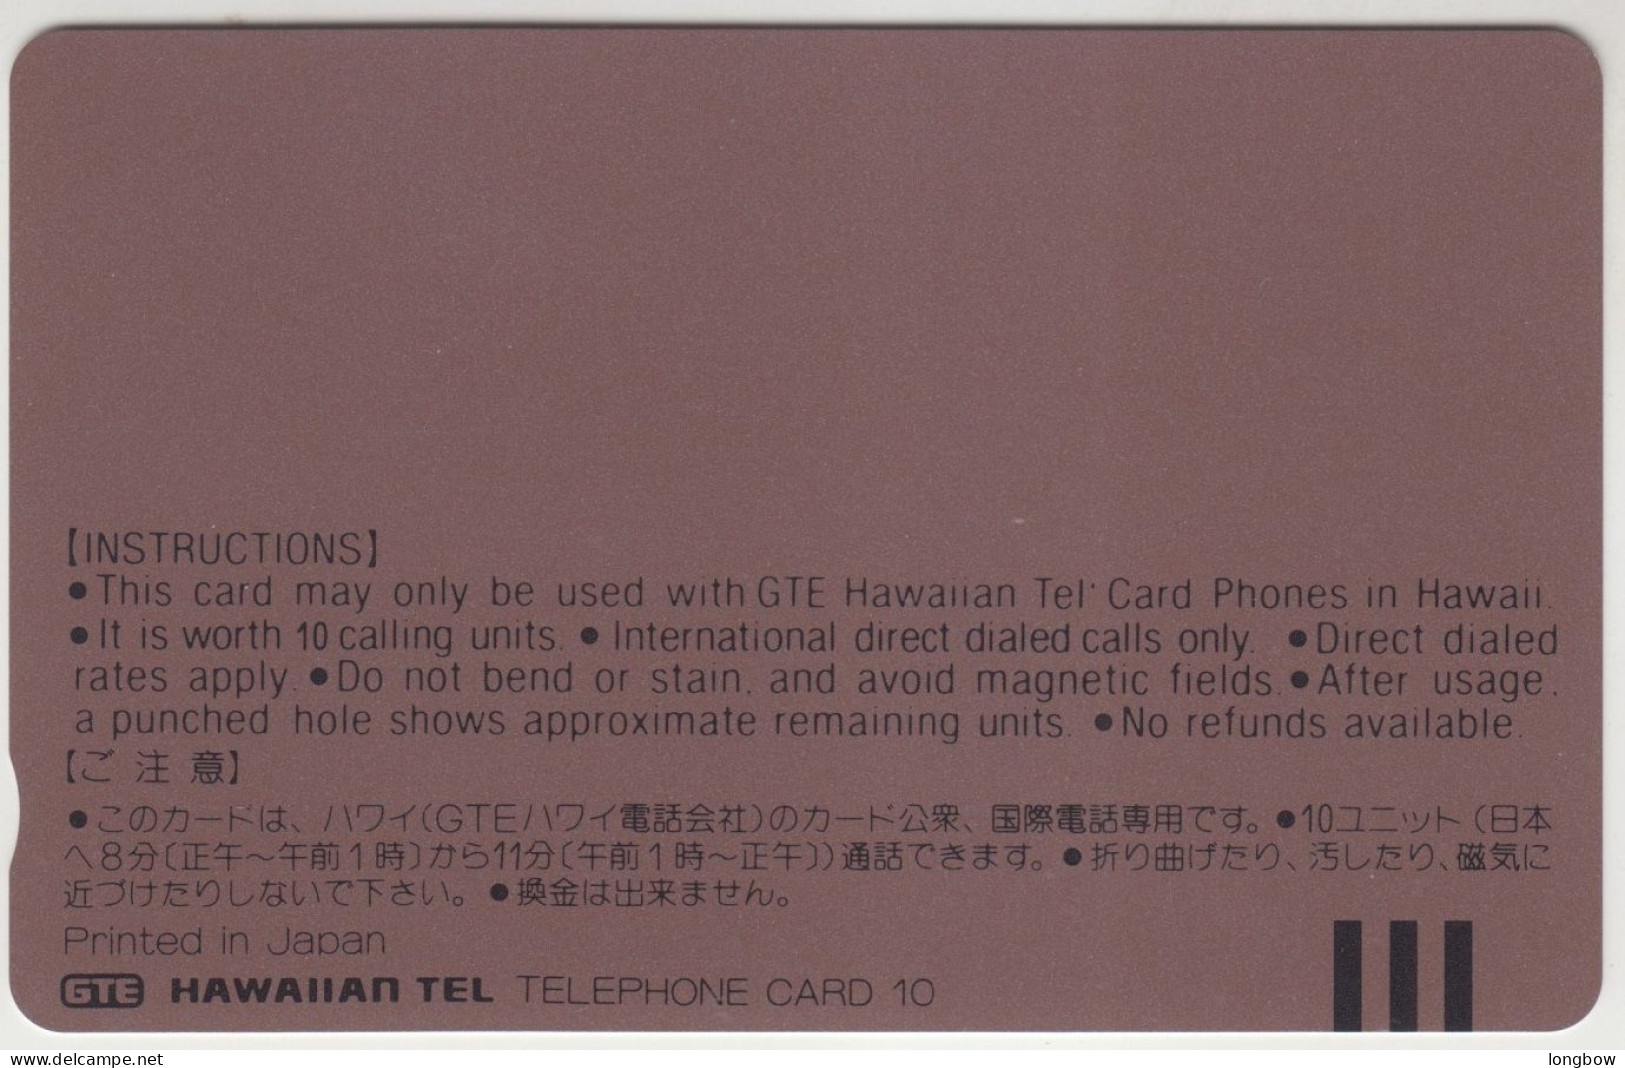 Hawaii Private Cards N°36 - 1995 Int.Symposium Japan America 2.000ex. Mint - Hawaii